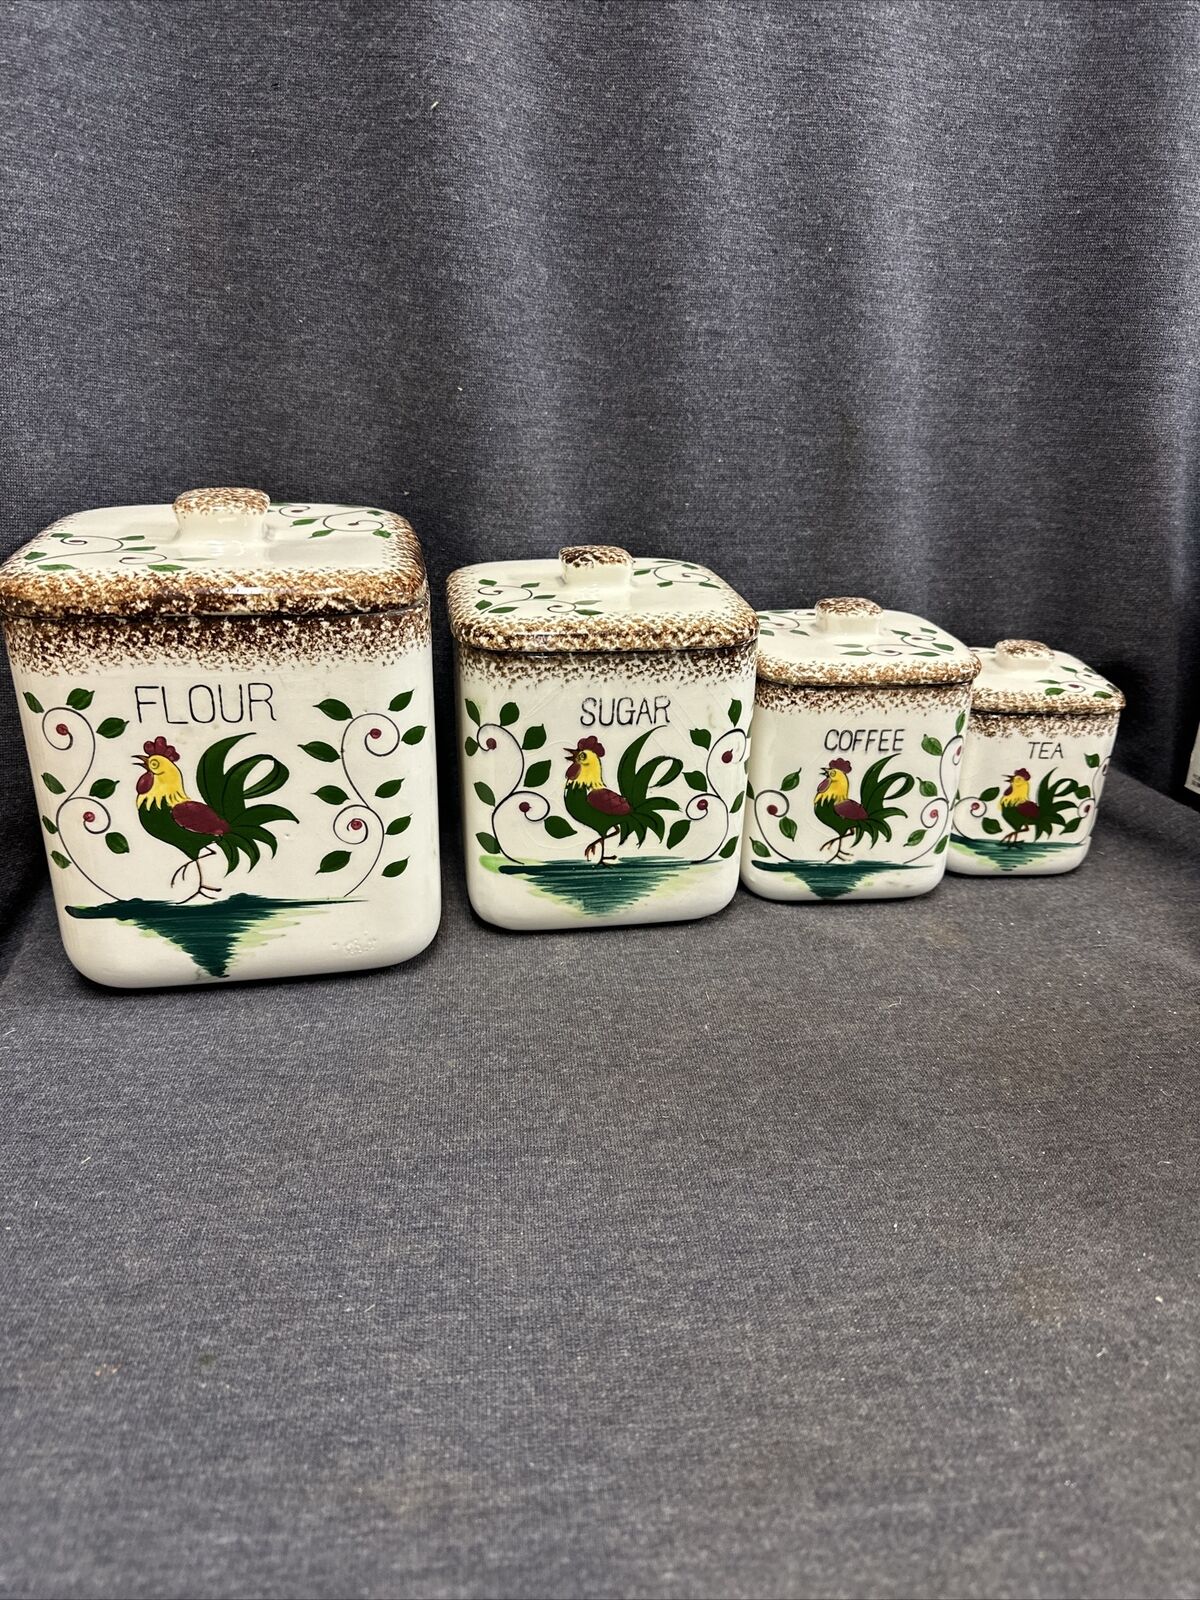 Napco Ceramic Rooster Canister Flour -Sugar -Coffee- Tea Set - Vintage 1960’s